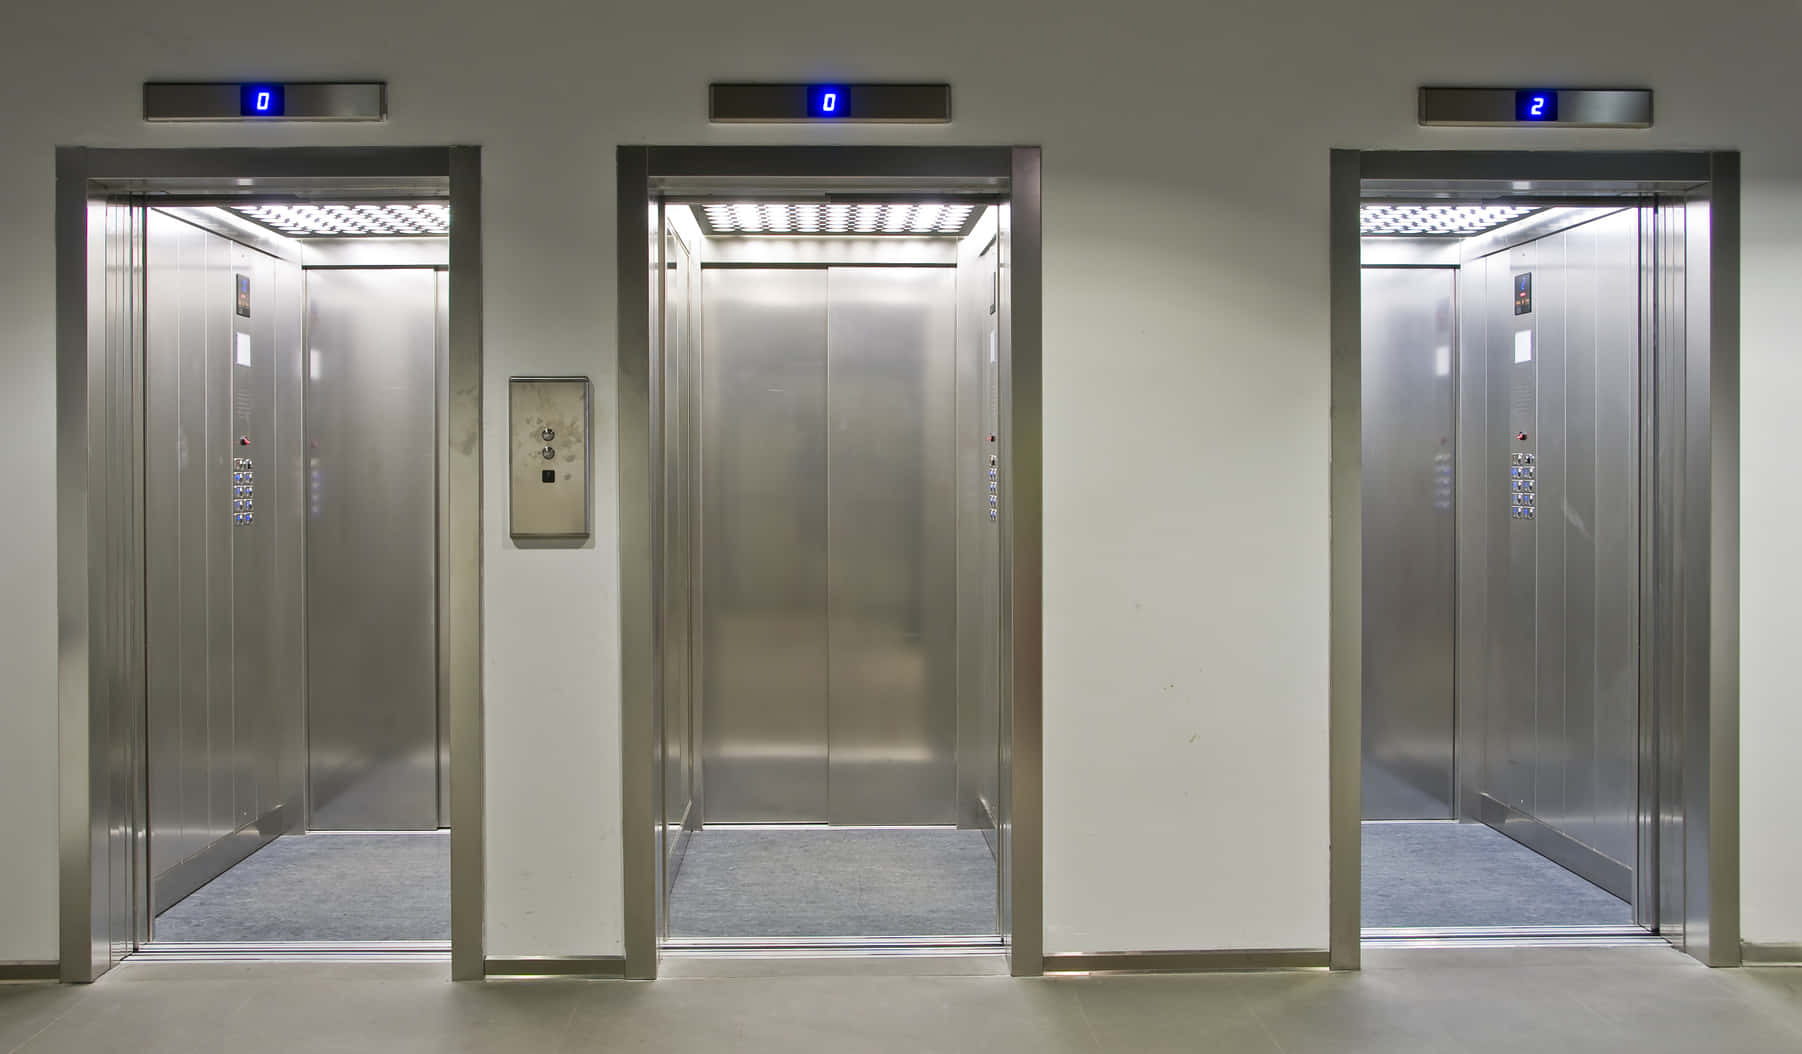 750+ Elevator Pictures [HD] | Download Free Images on Unsplash